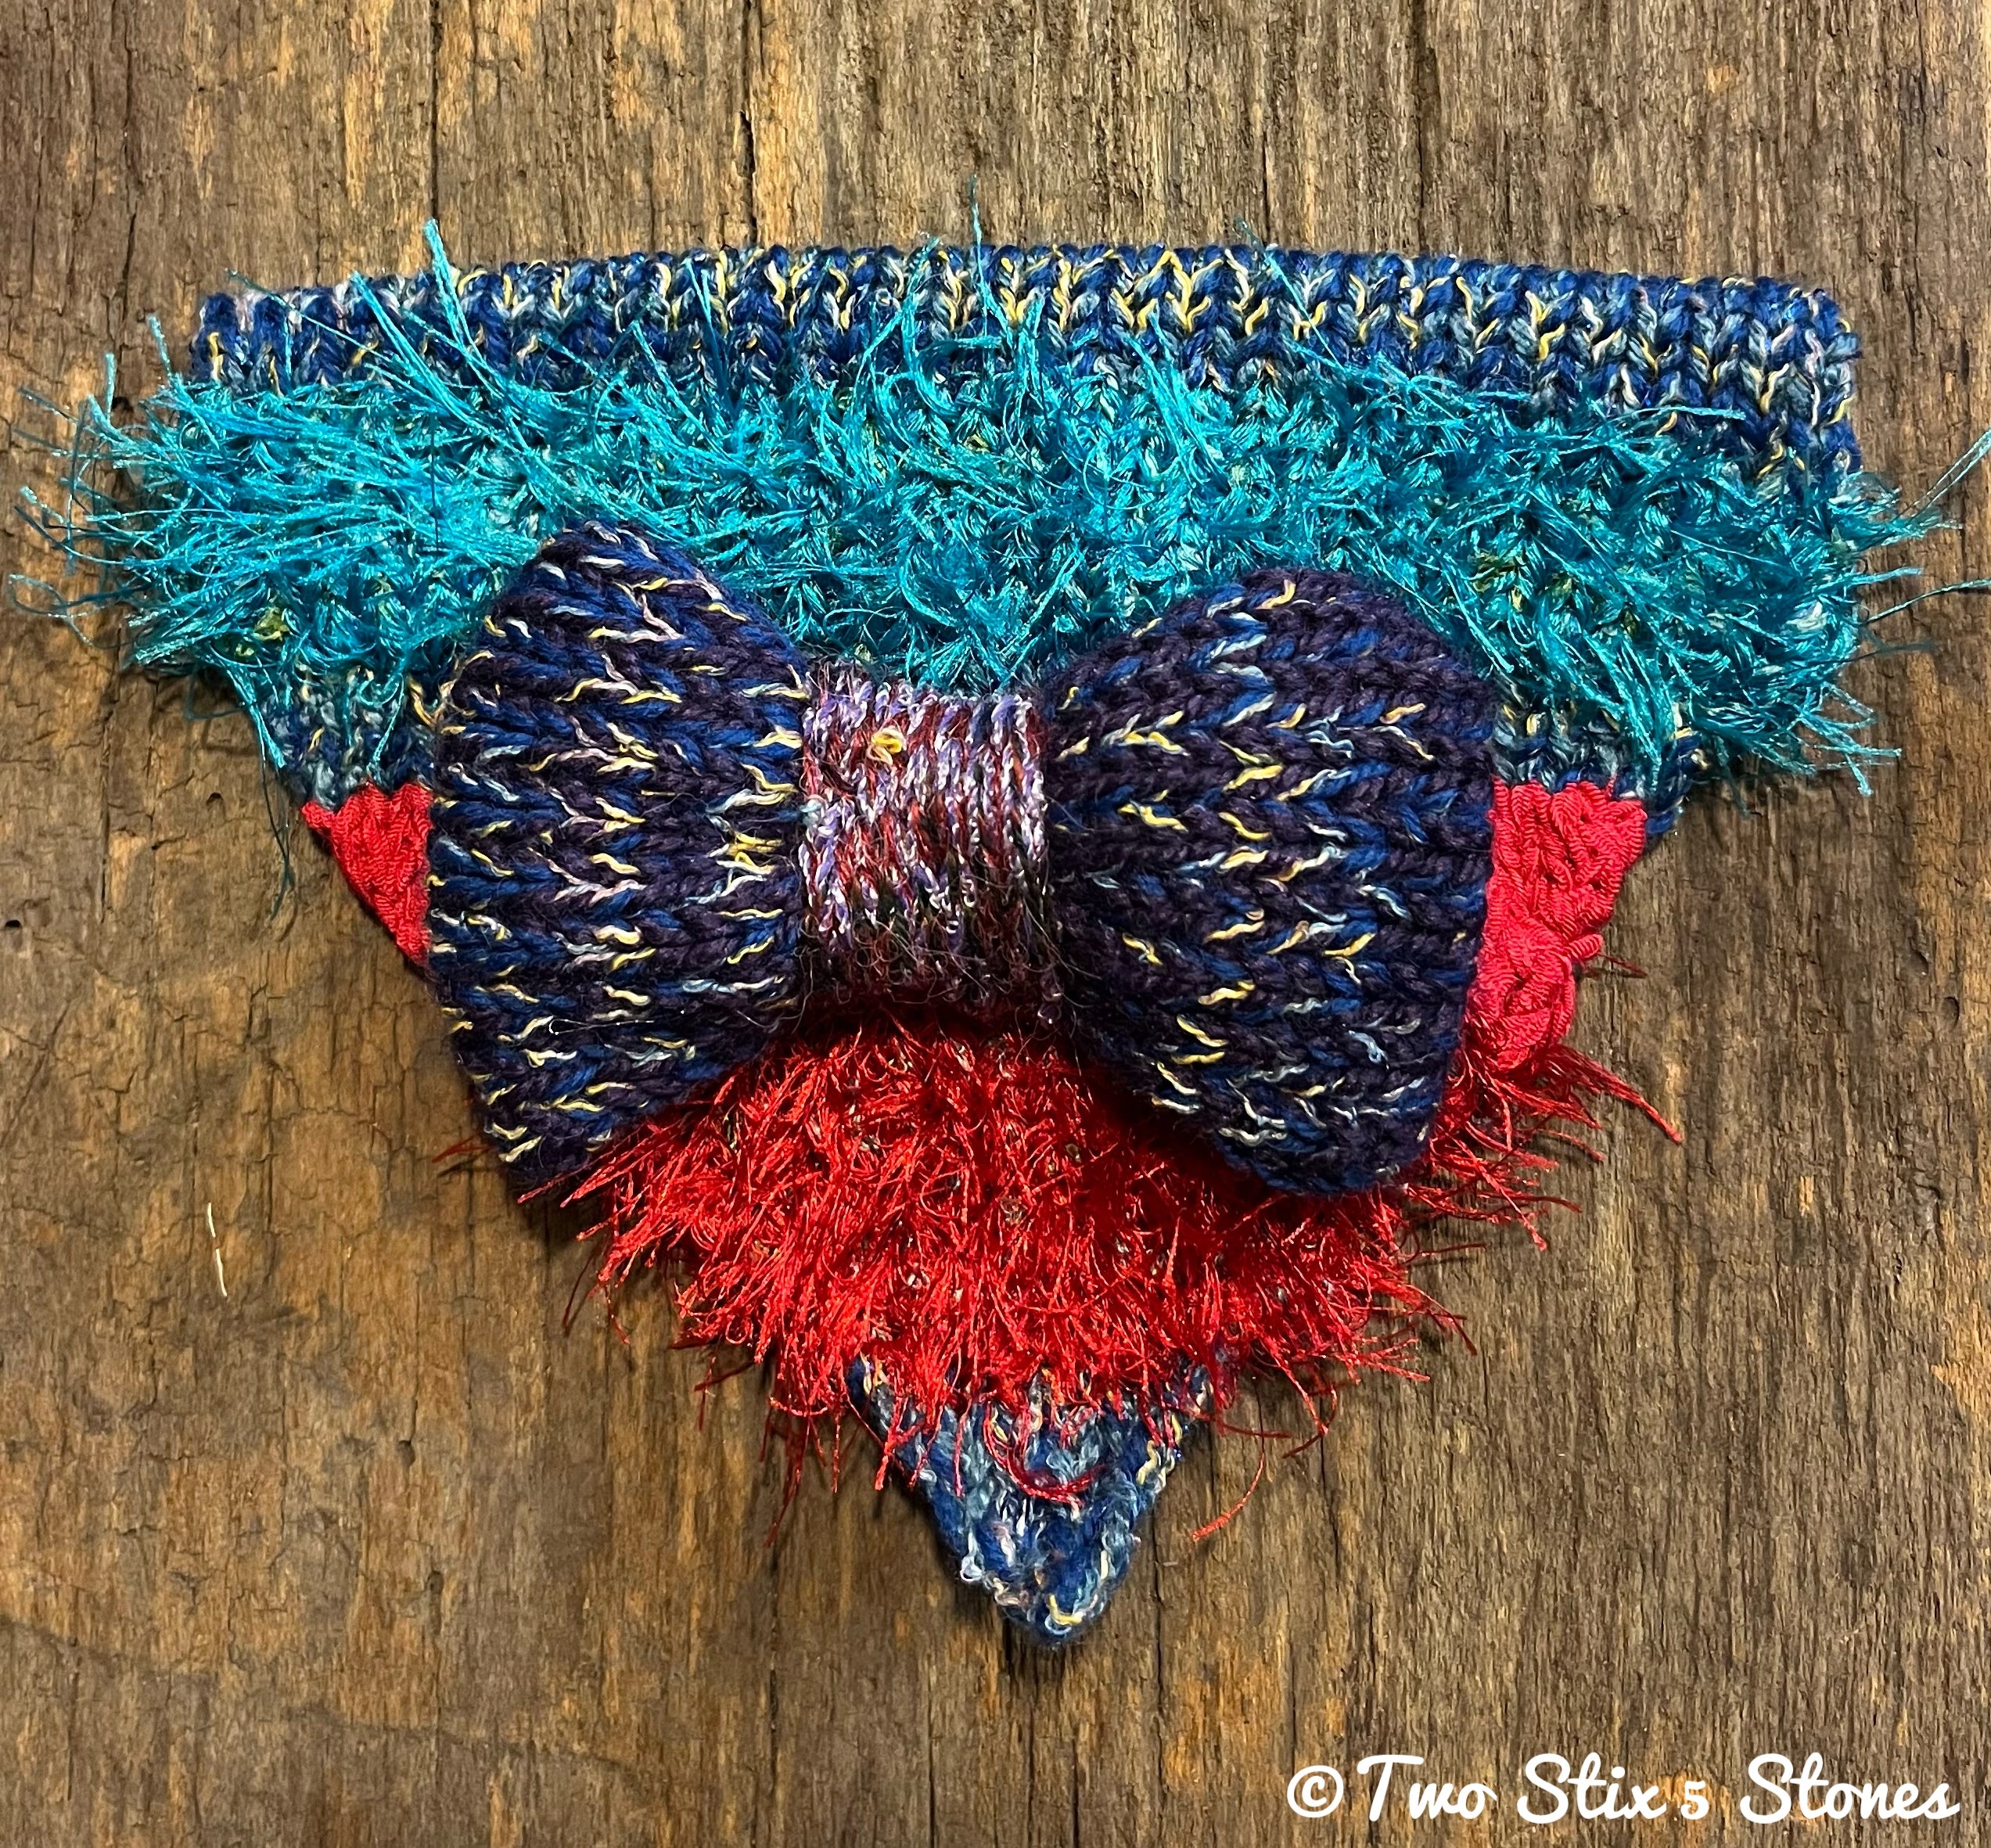 S/M - Pet Tweed Knit Bandana